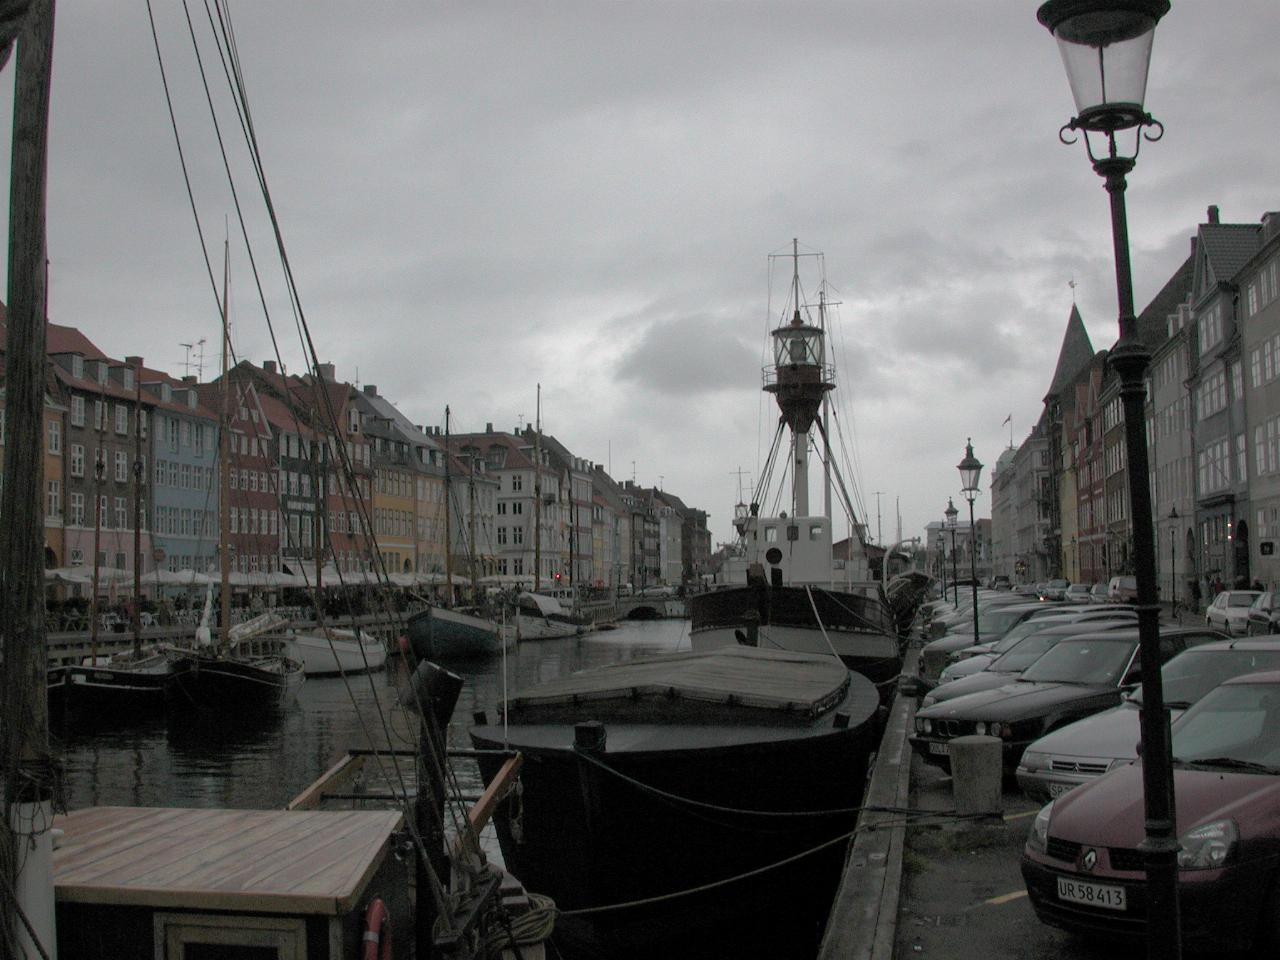 KPLU Viking Jazz: Nyhavn's boating contingent